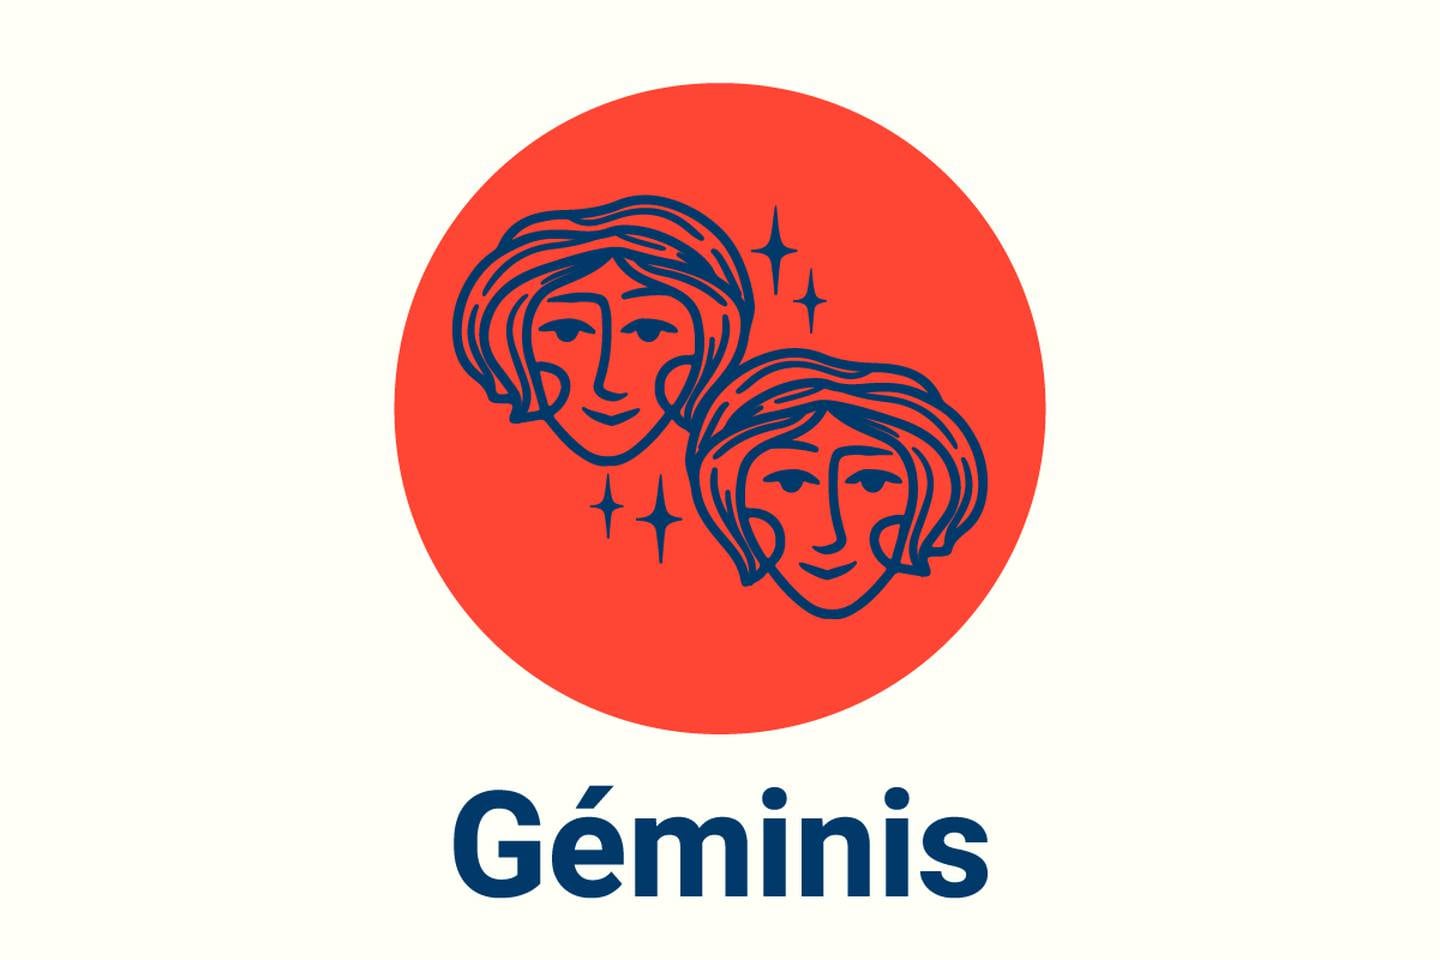 Imagen con el símbolo del signo zodiacal Géminis.